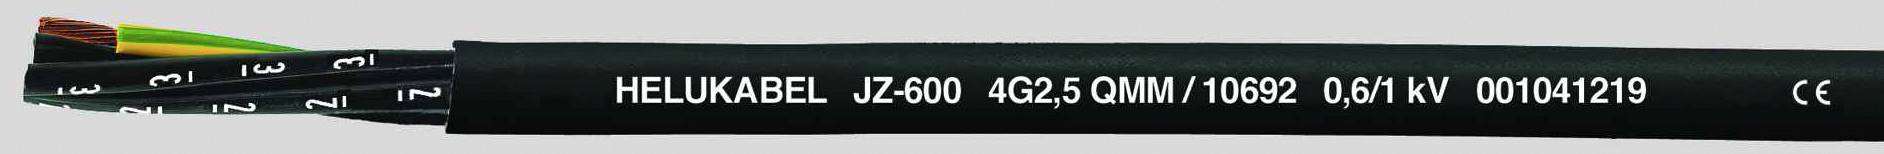 HELUKABEL JZ-600 Steuerleitung 7 G 2.50 mm² Schwarz 10696-1000 1000 m